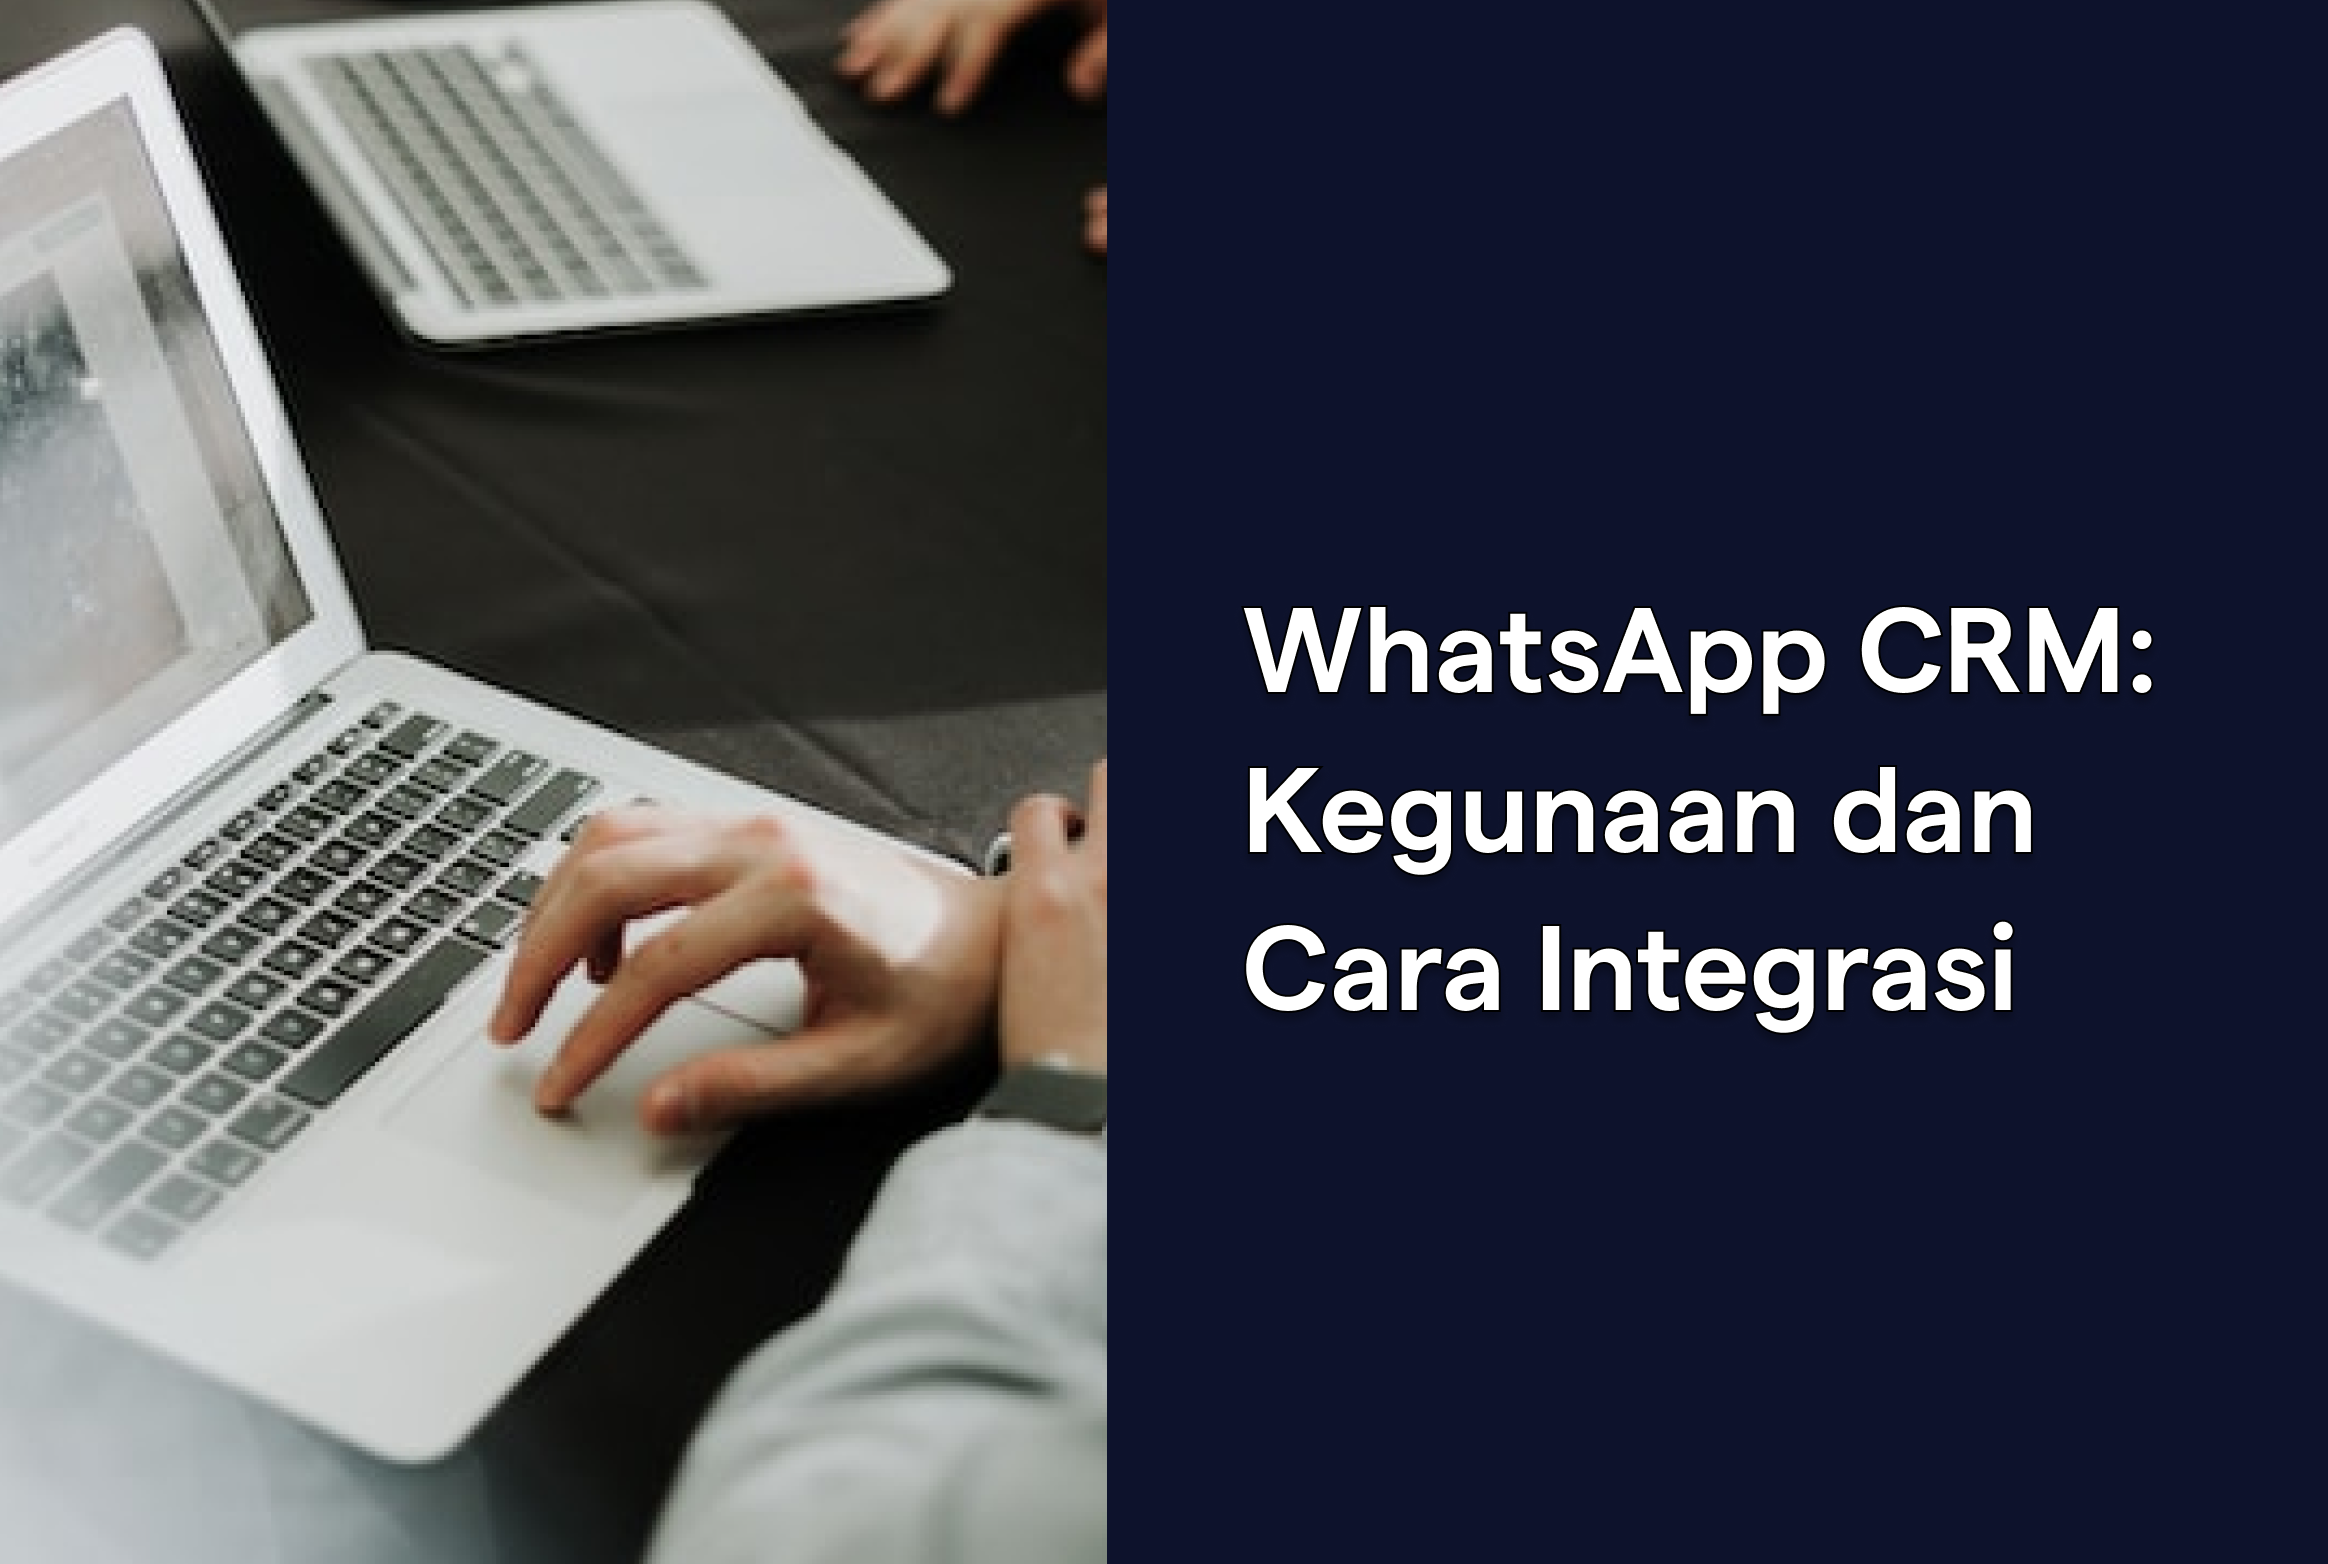 WhatsApp CRM Kegunaan dan Cara Integrasinya